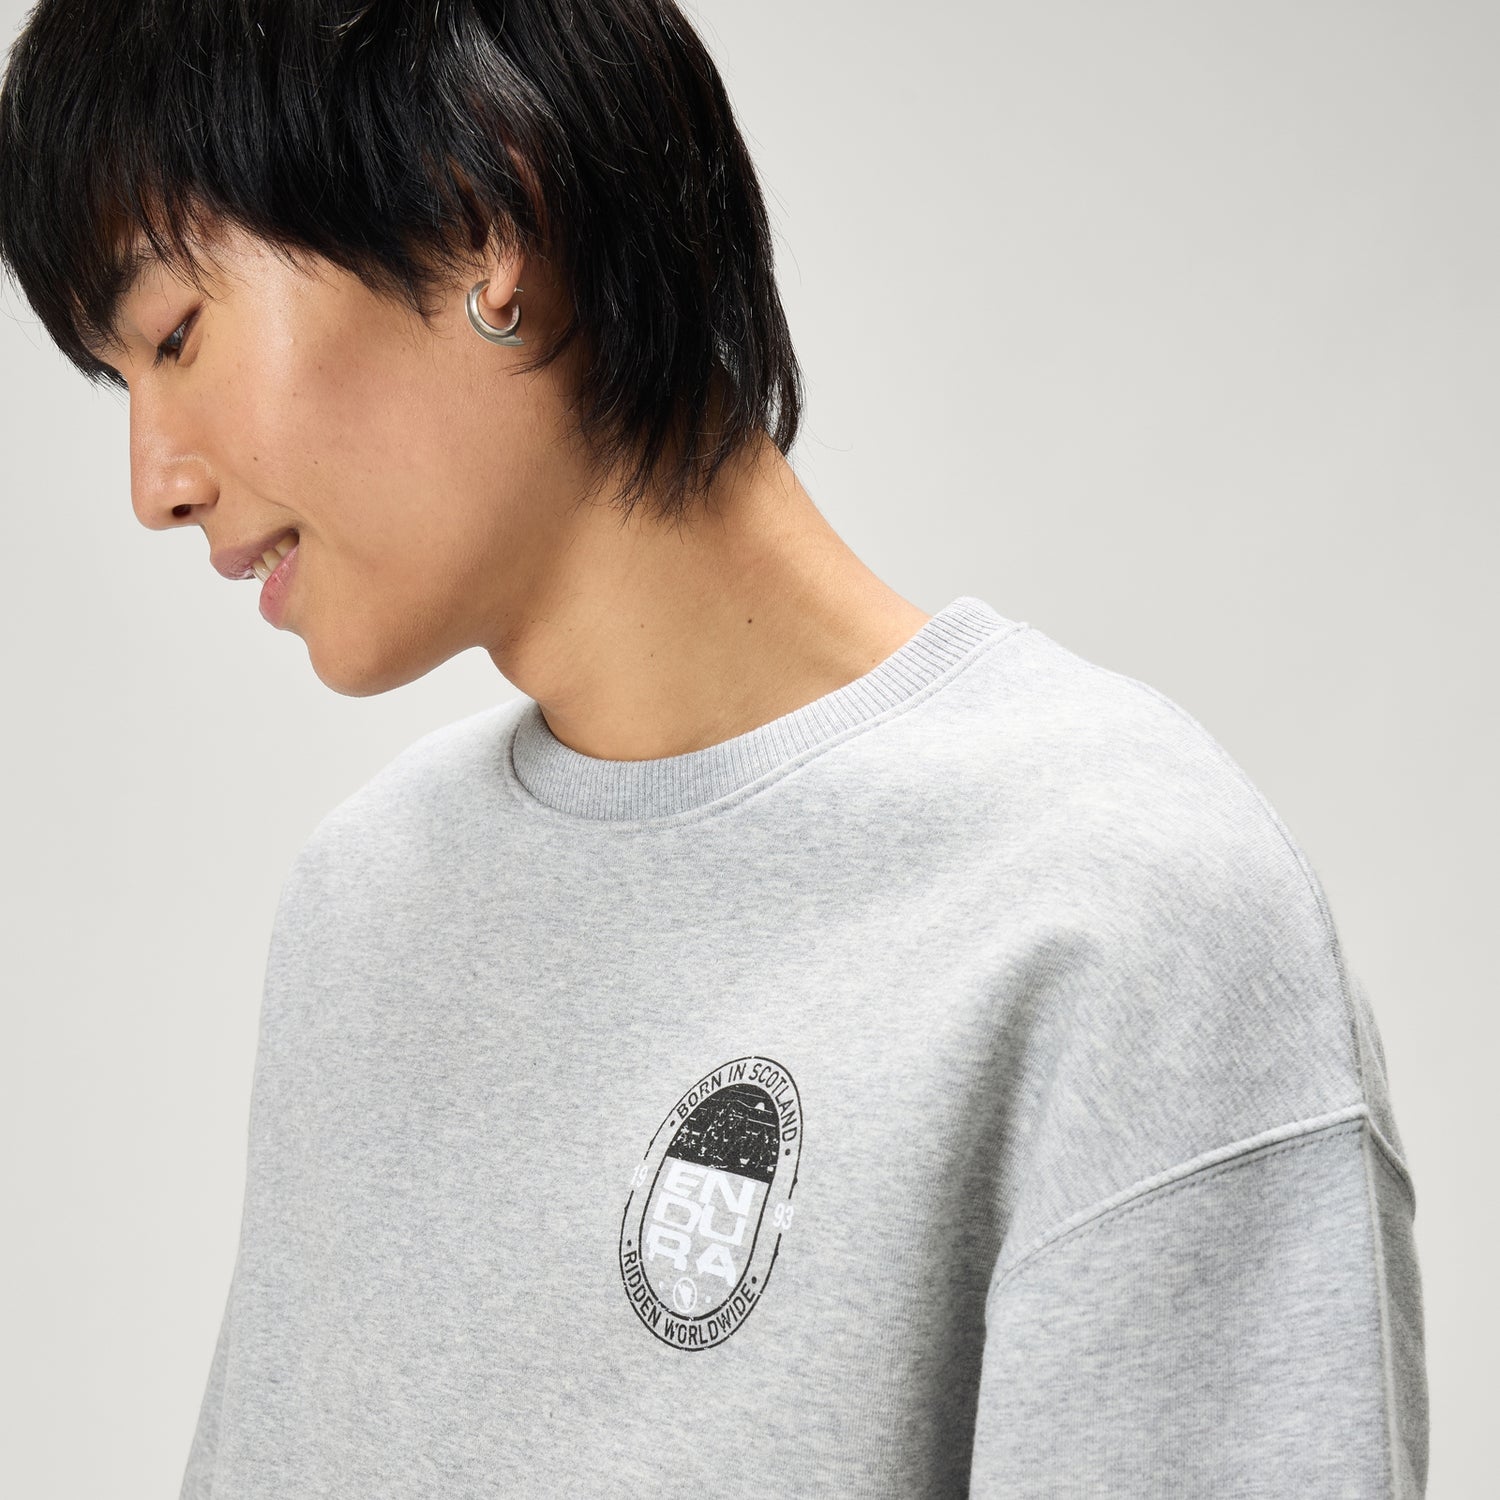 Unisex 'Ninety Three' Sweatshirt - Heathered Grey - L